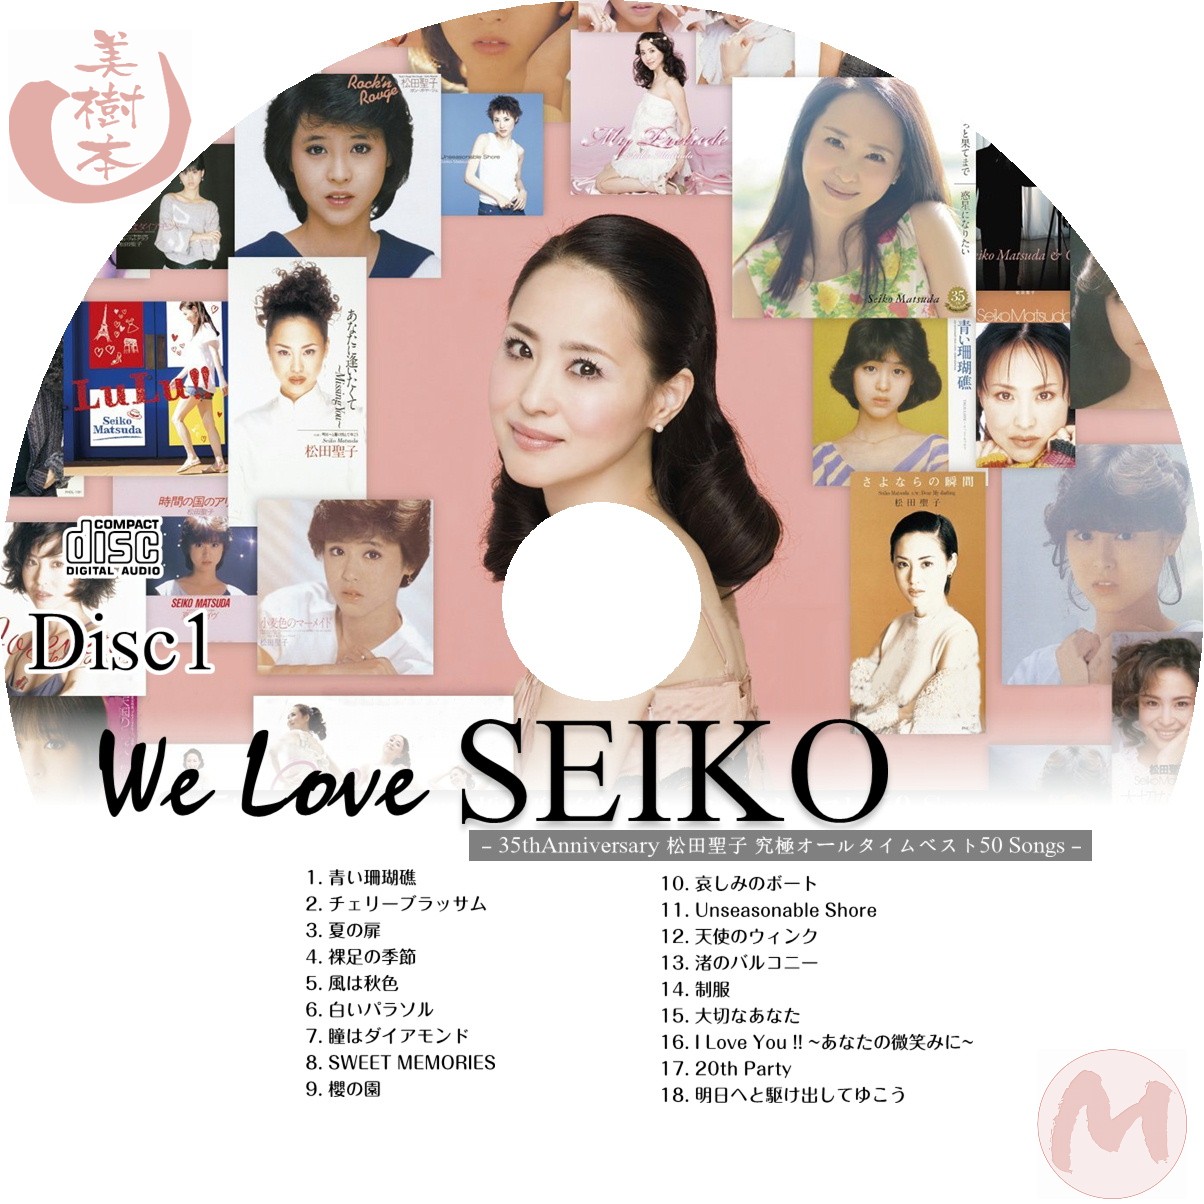 We Love SEIKO - 35thAnniversary 松田聖子 究極オールタイムベスト50